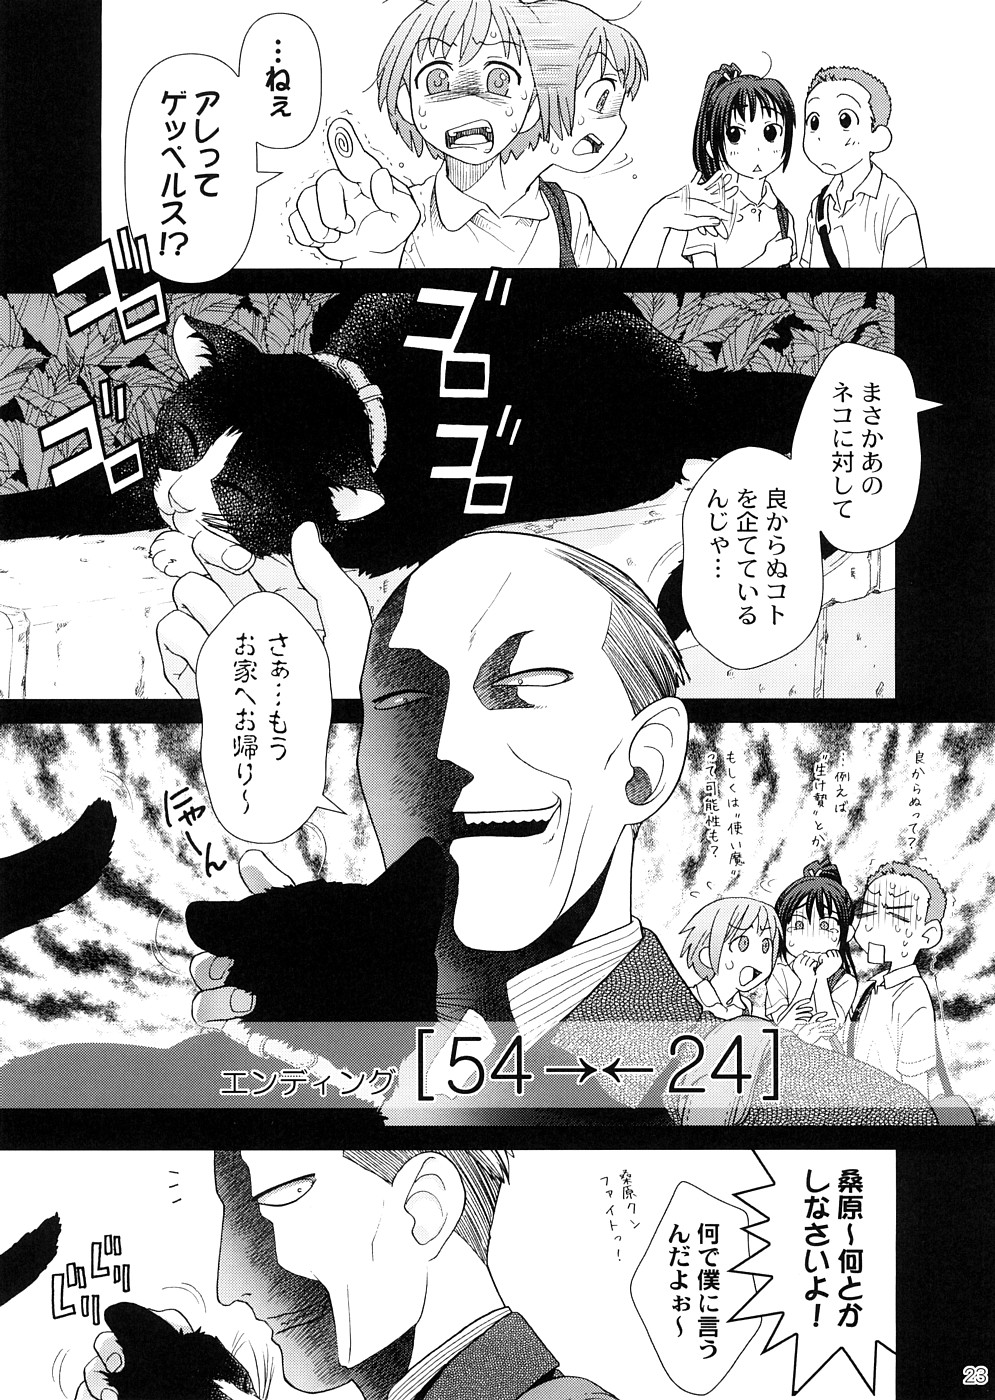 (COMIC1☆2) [オタクビーム (オオツカマヒロ)] 2514 [24→←14] #Extra chapter